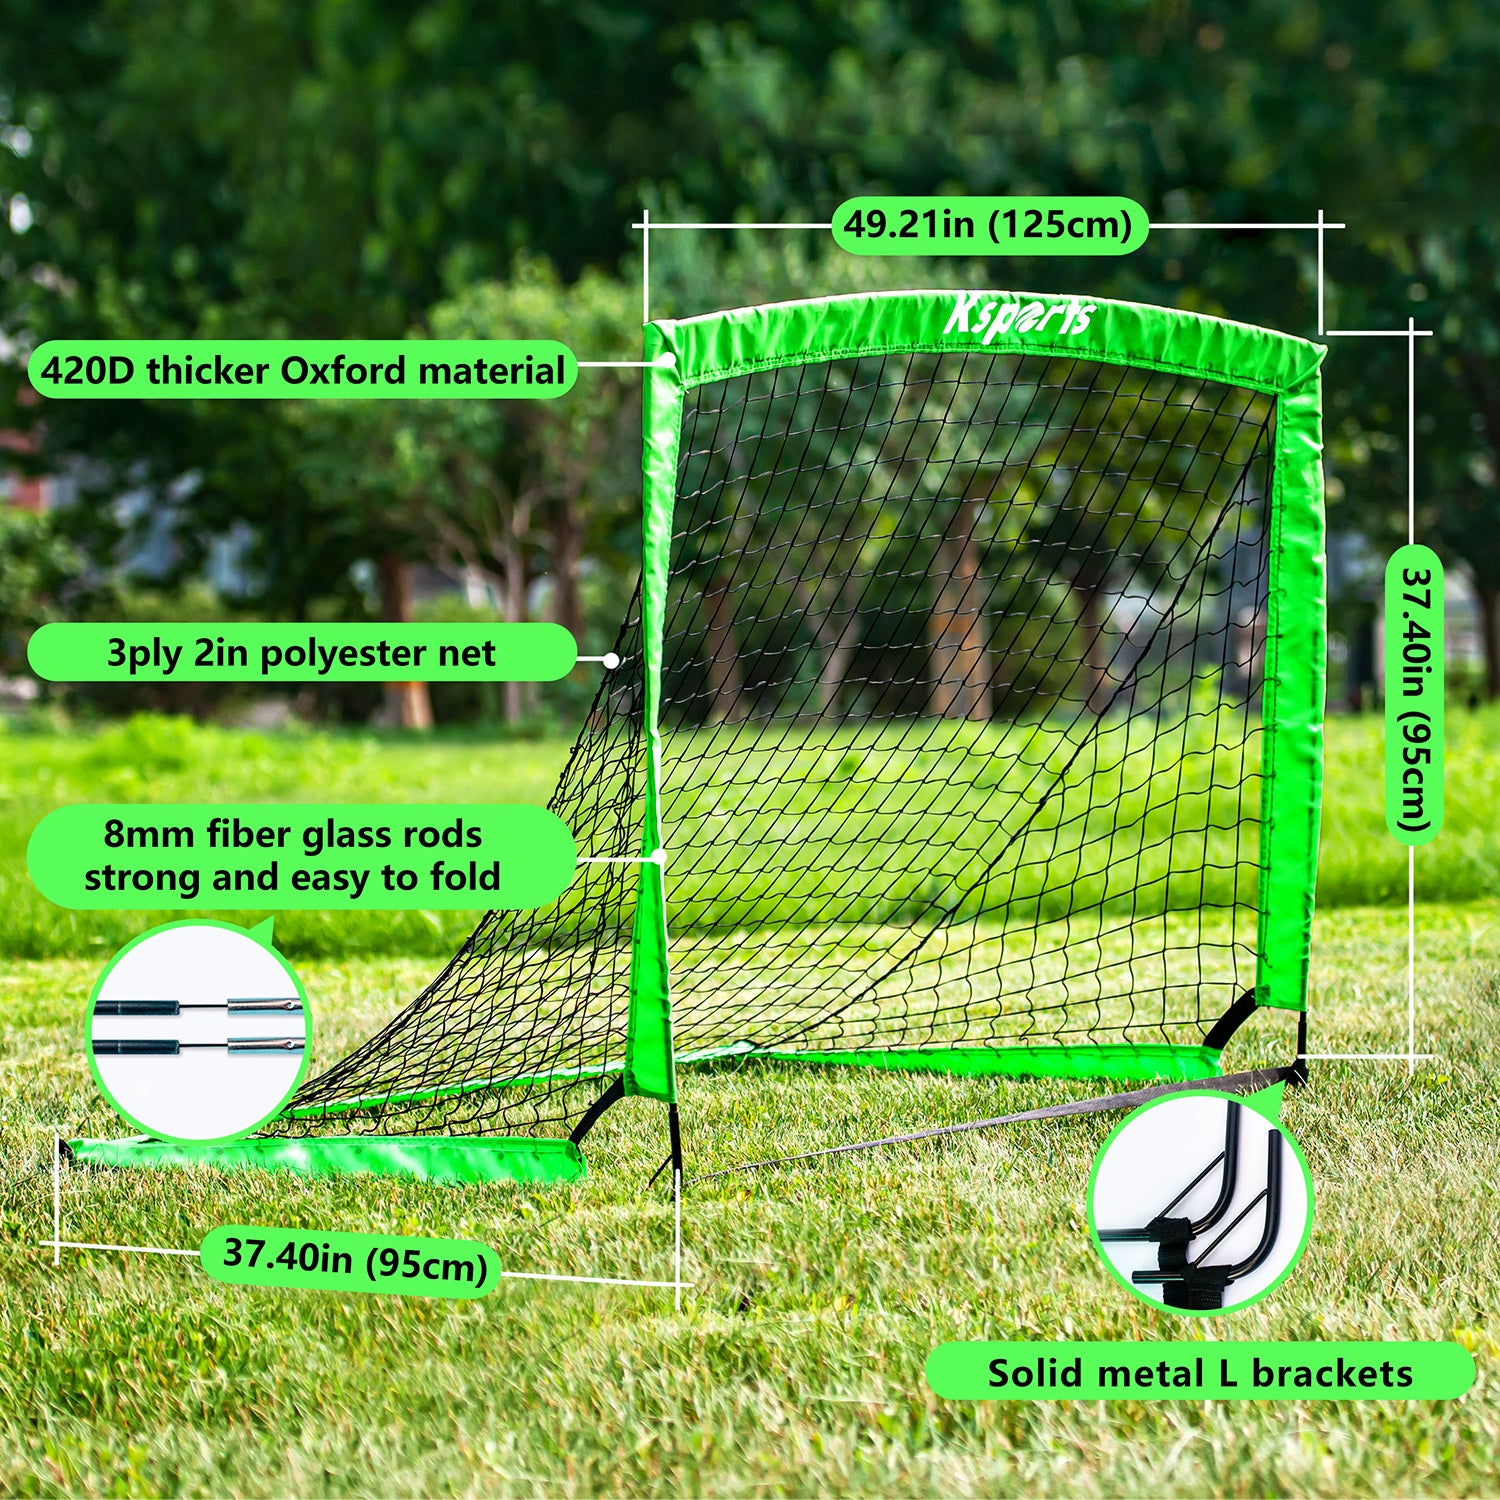 Ksports Soccer Nets Bundle 4ft Green (2 Nets)